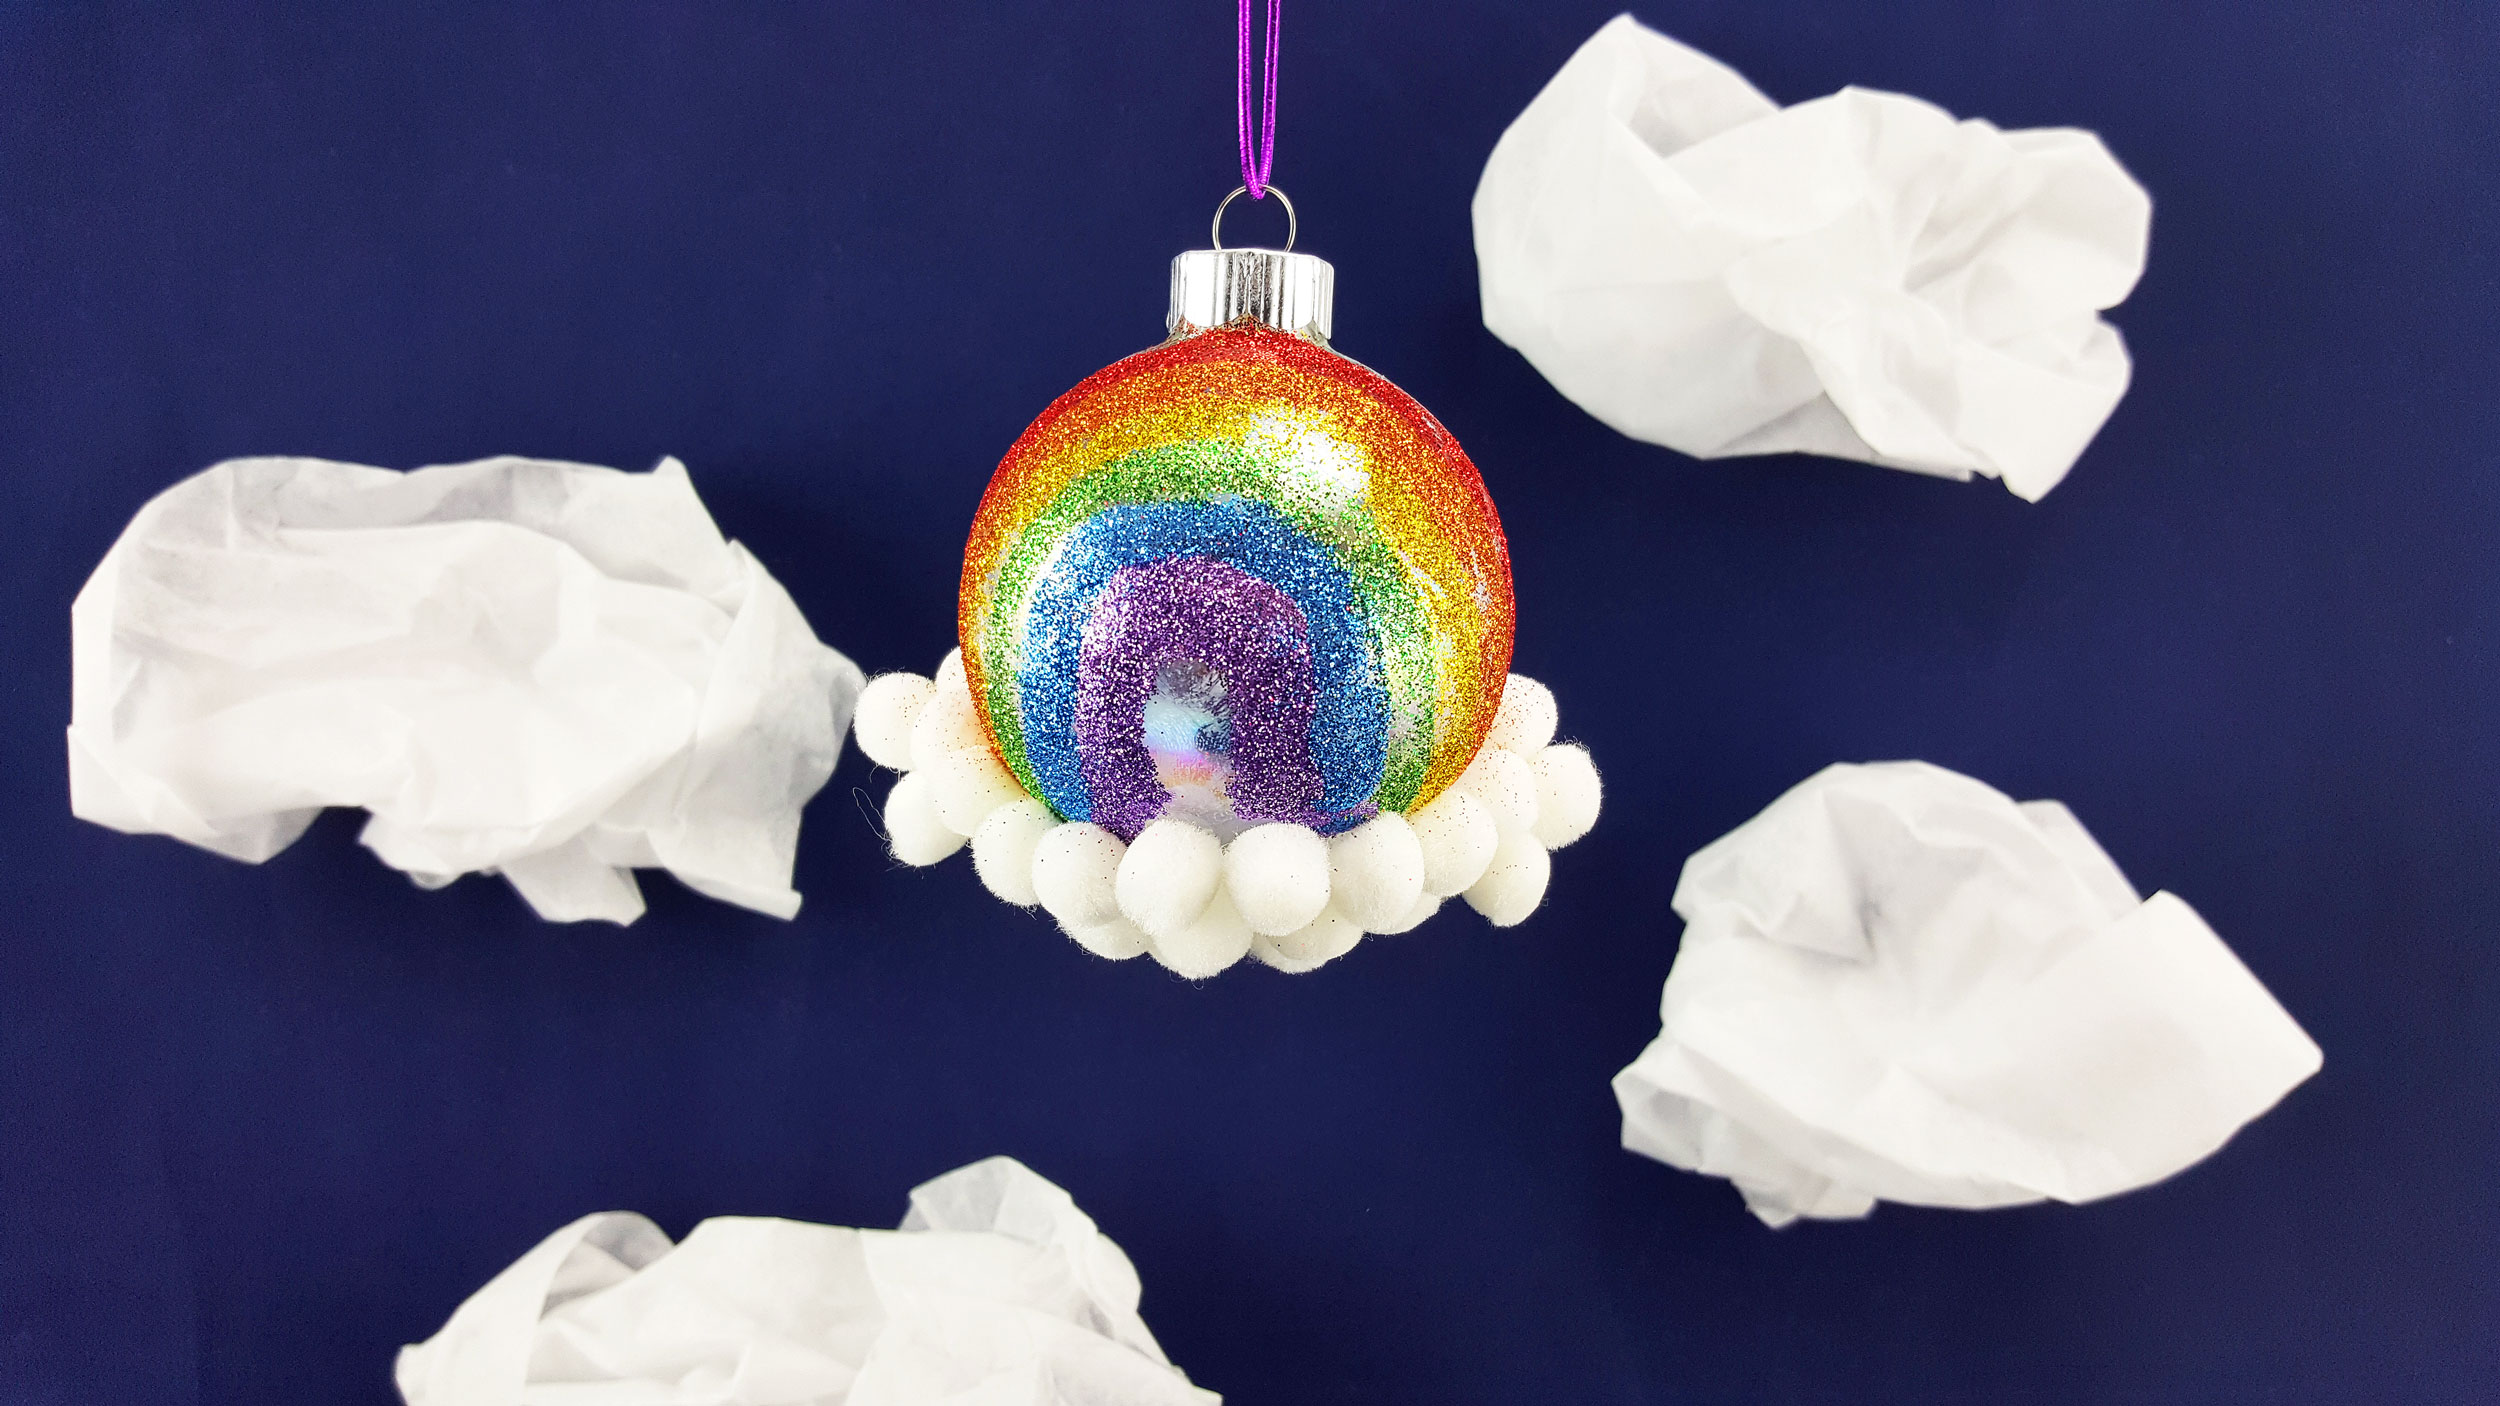 Rainbow Craft Ornament in Clouds | OrnamentShop.com